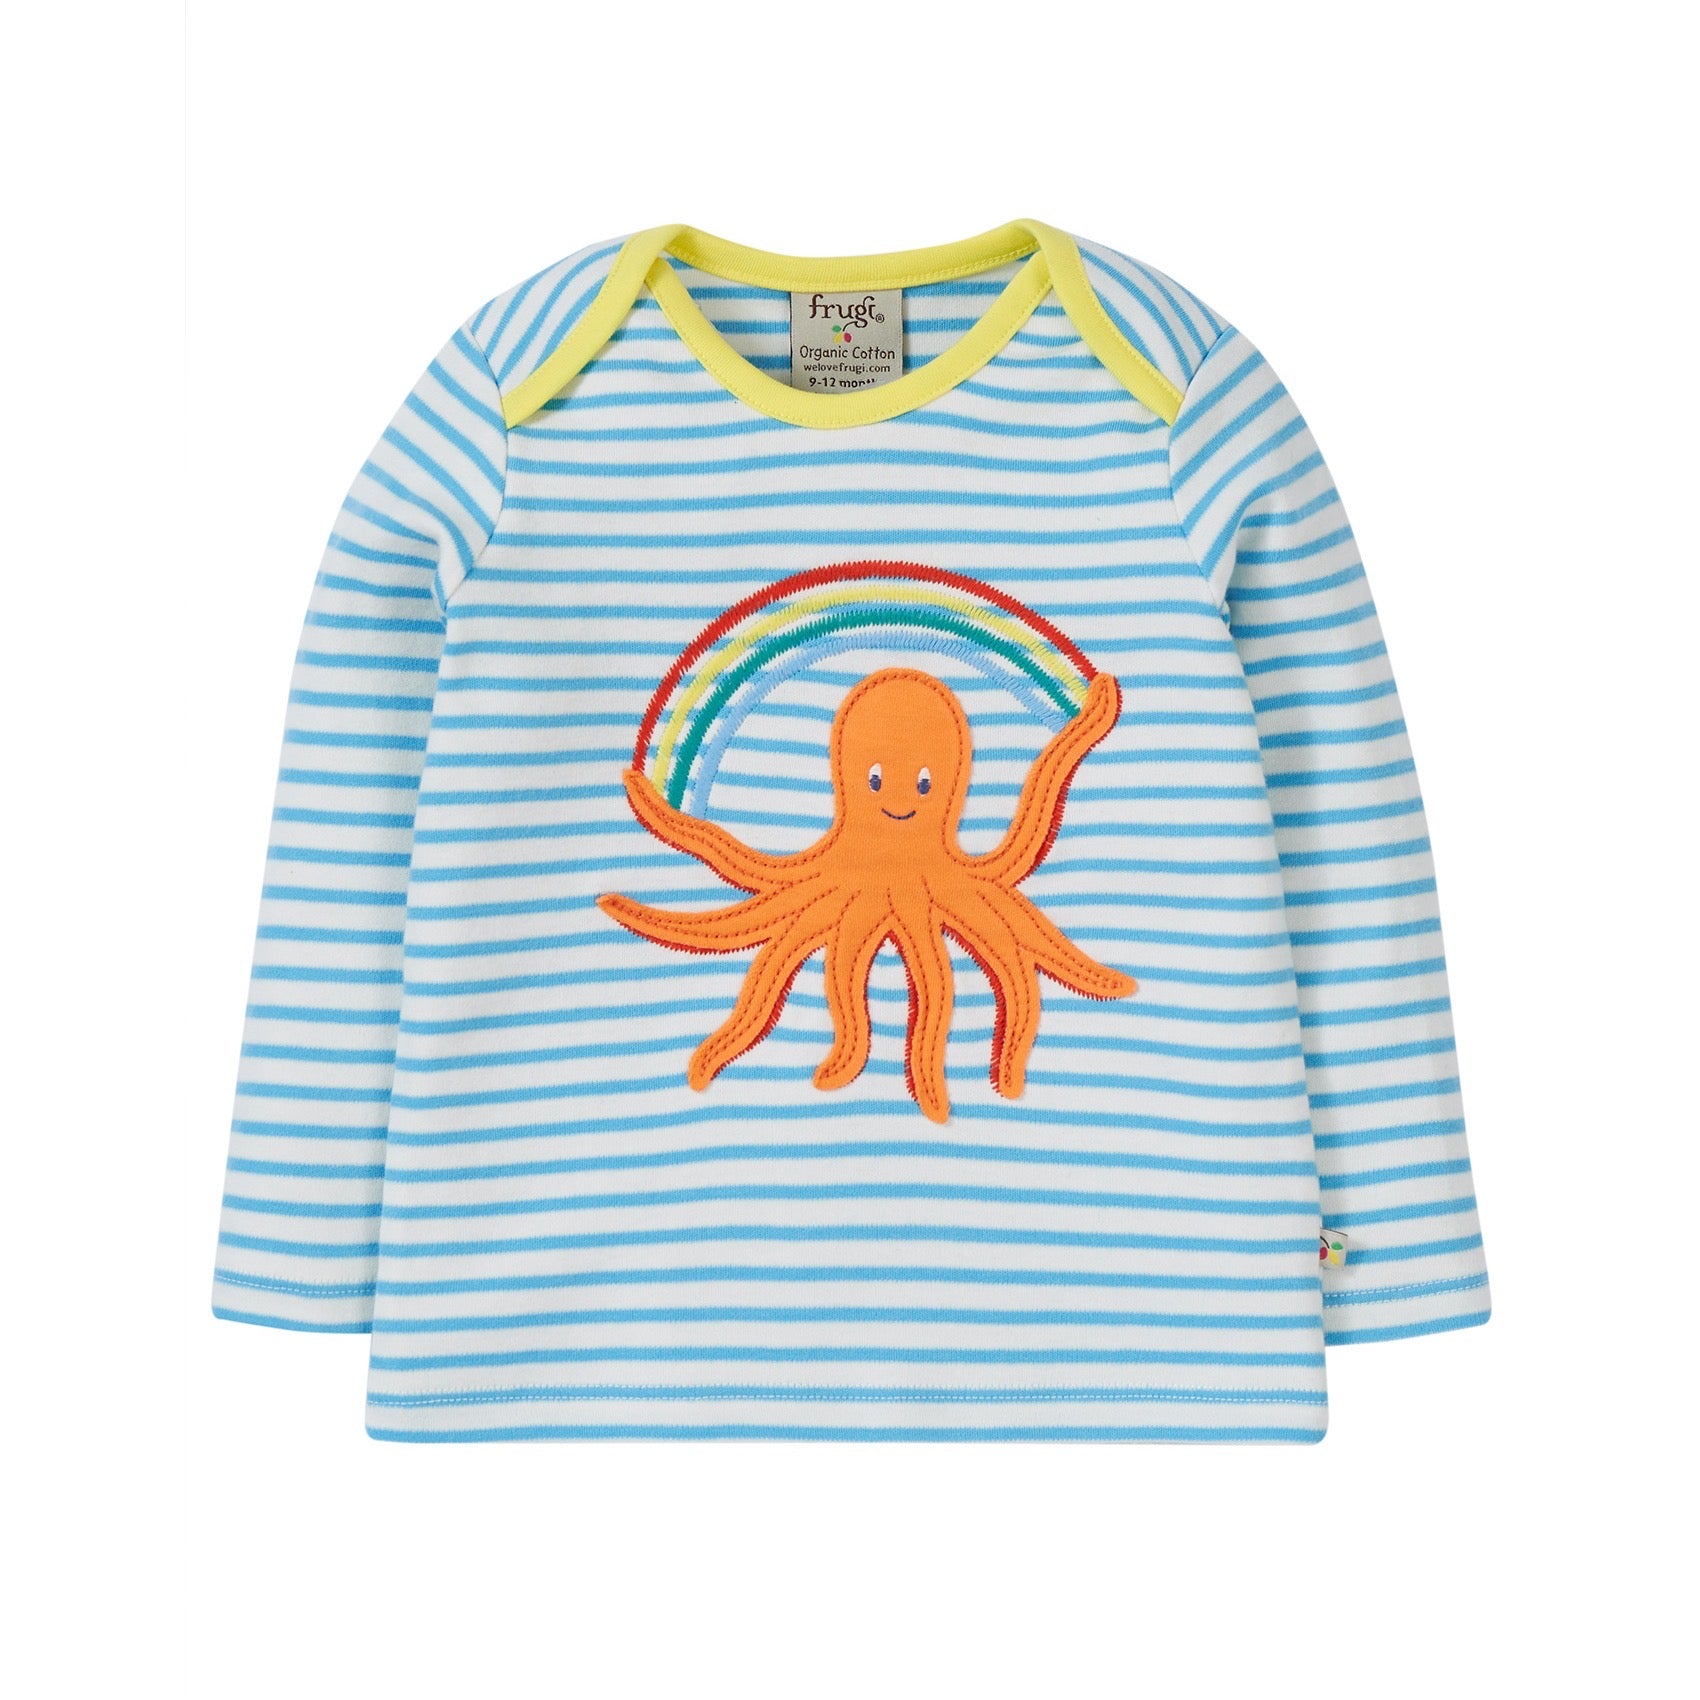 Frugi Bobby Infant T-Shirt Kf7ys Octopus Clothing 3-6M / Blue,6-9M / Blue,9-12M / Blue,12-18M / Blue